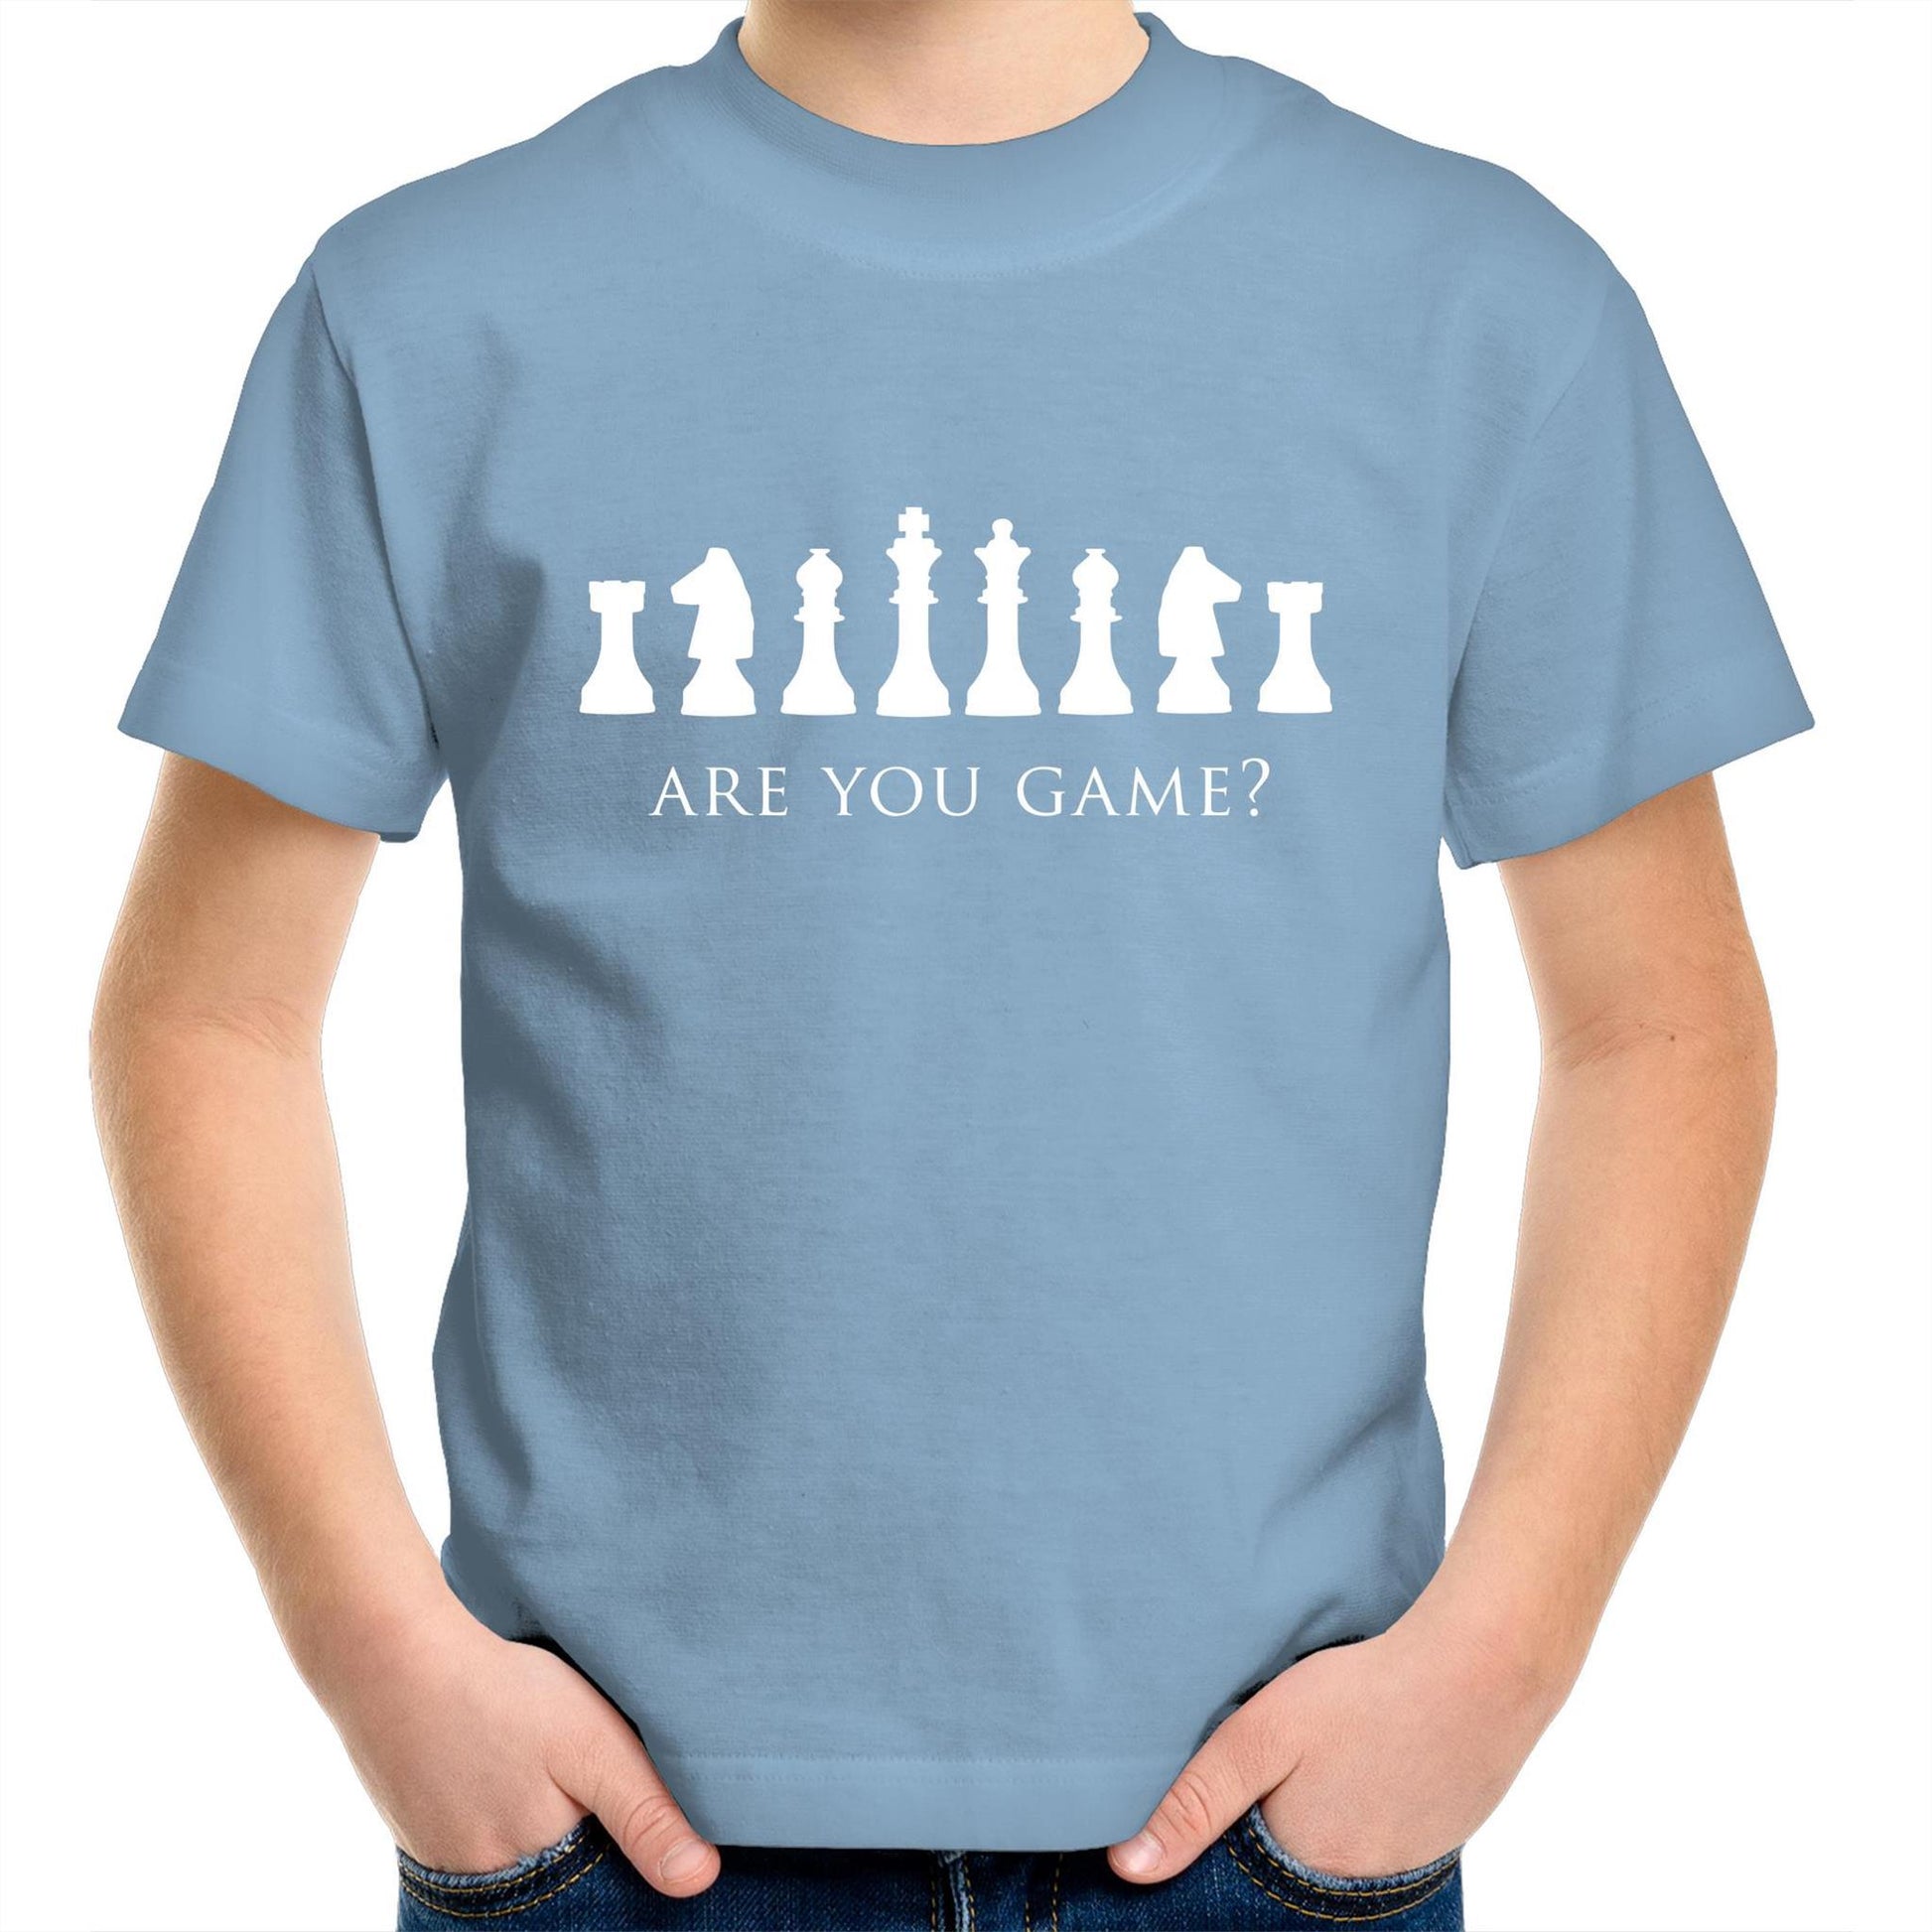 Are You Game - Kids Youth Crew T-shirt Carolina Blue Kids Youth T-shirt Chess